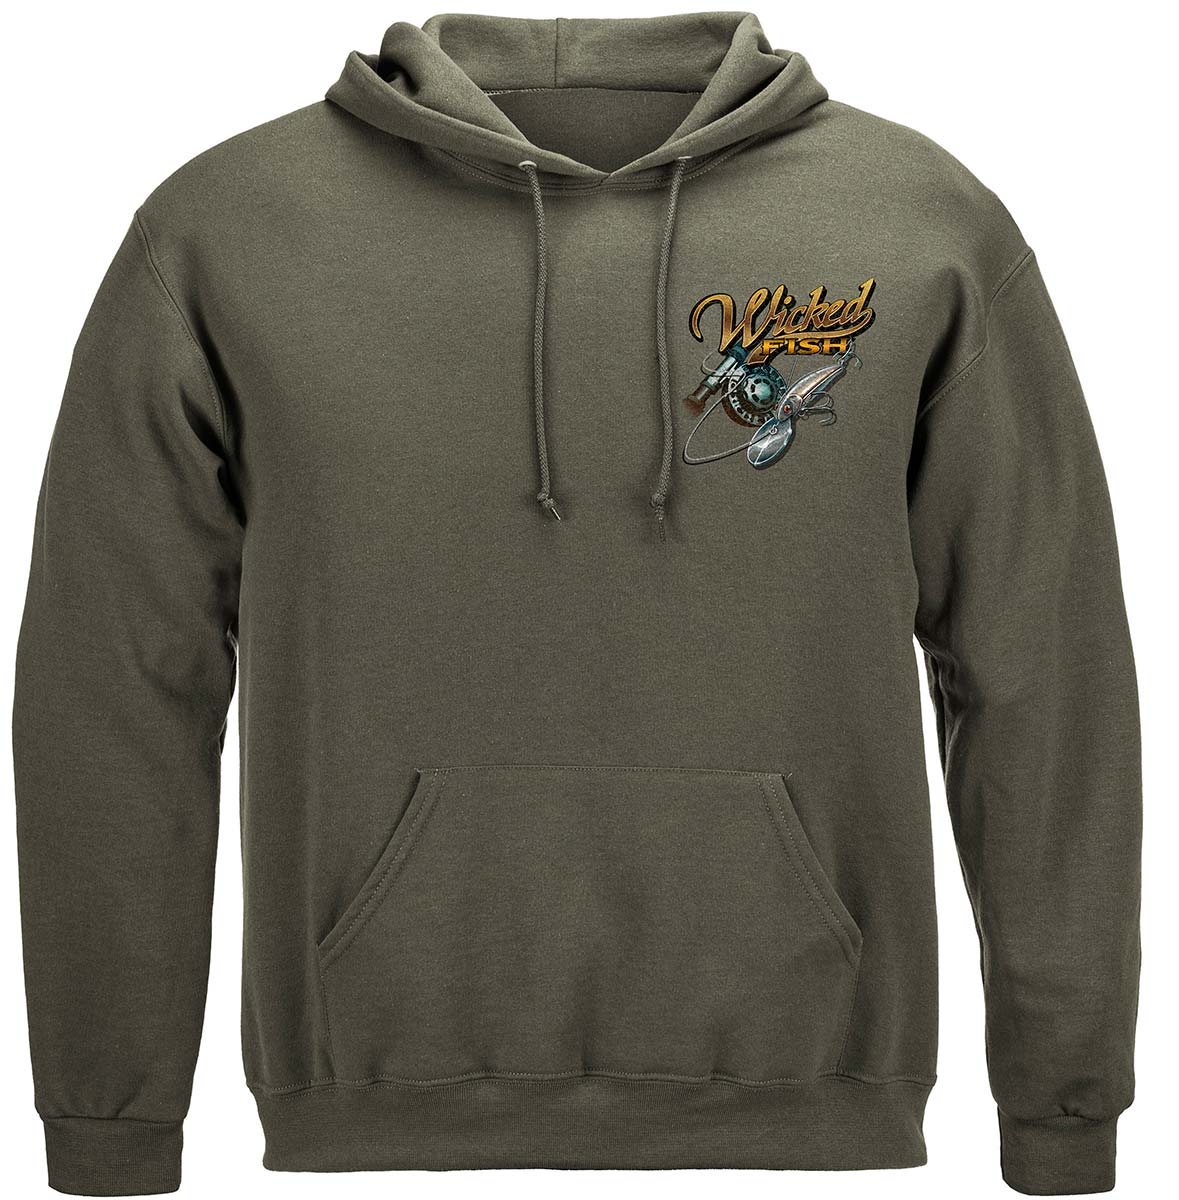 Wicked Fish Walleye Premium Hooded Sweat Shirt